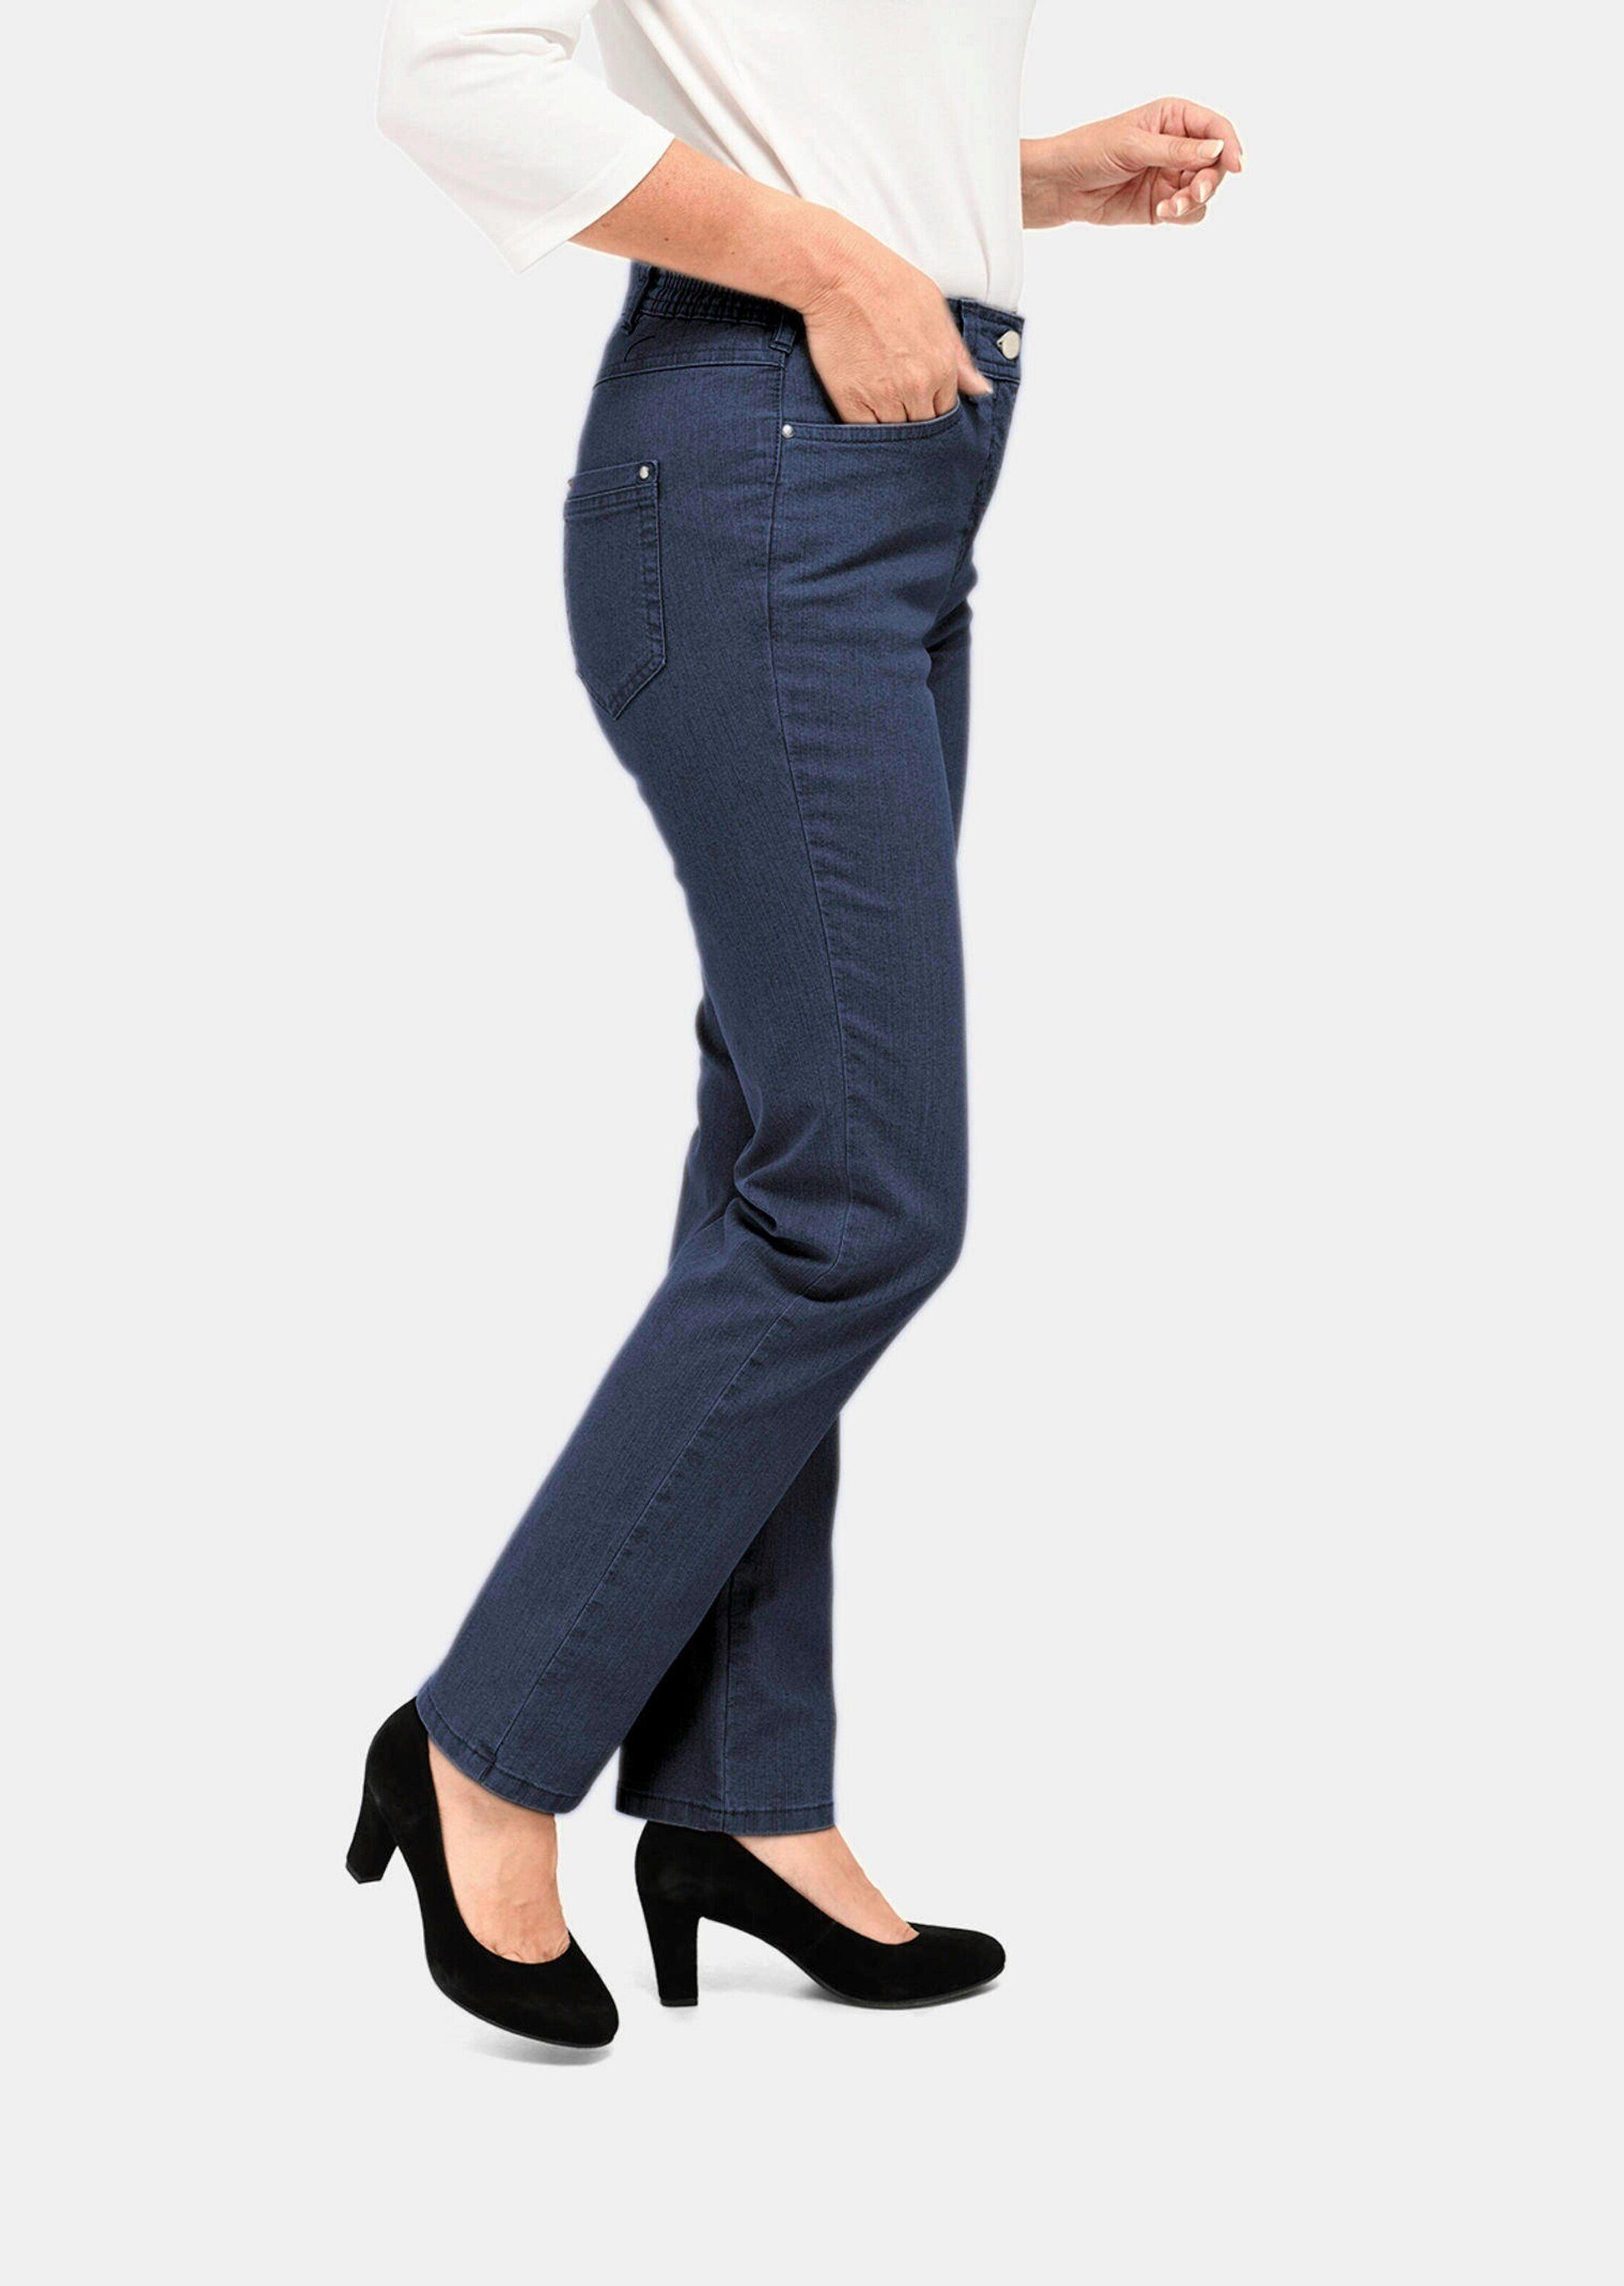 Bequeme Klassische Jeans Kurzgröße: Jeanshose Carla GOLDNER dunkelblau